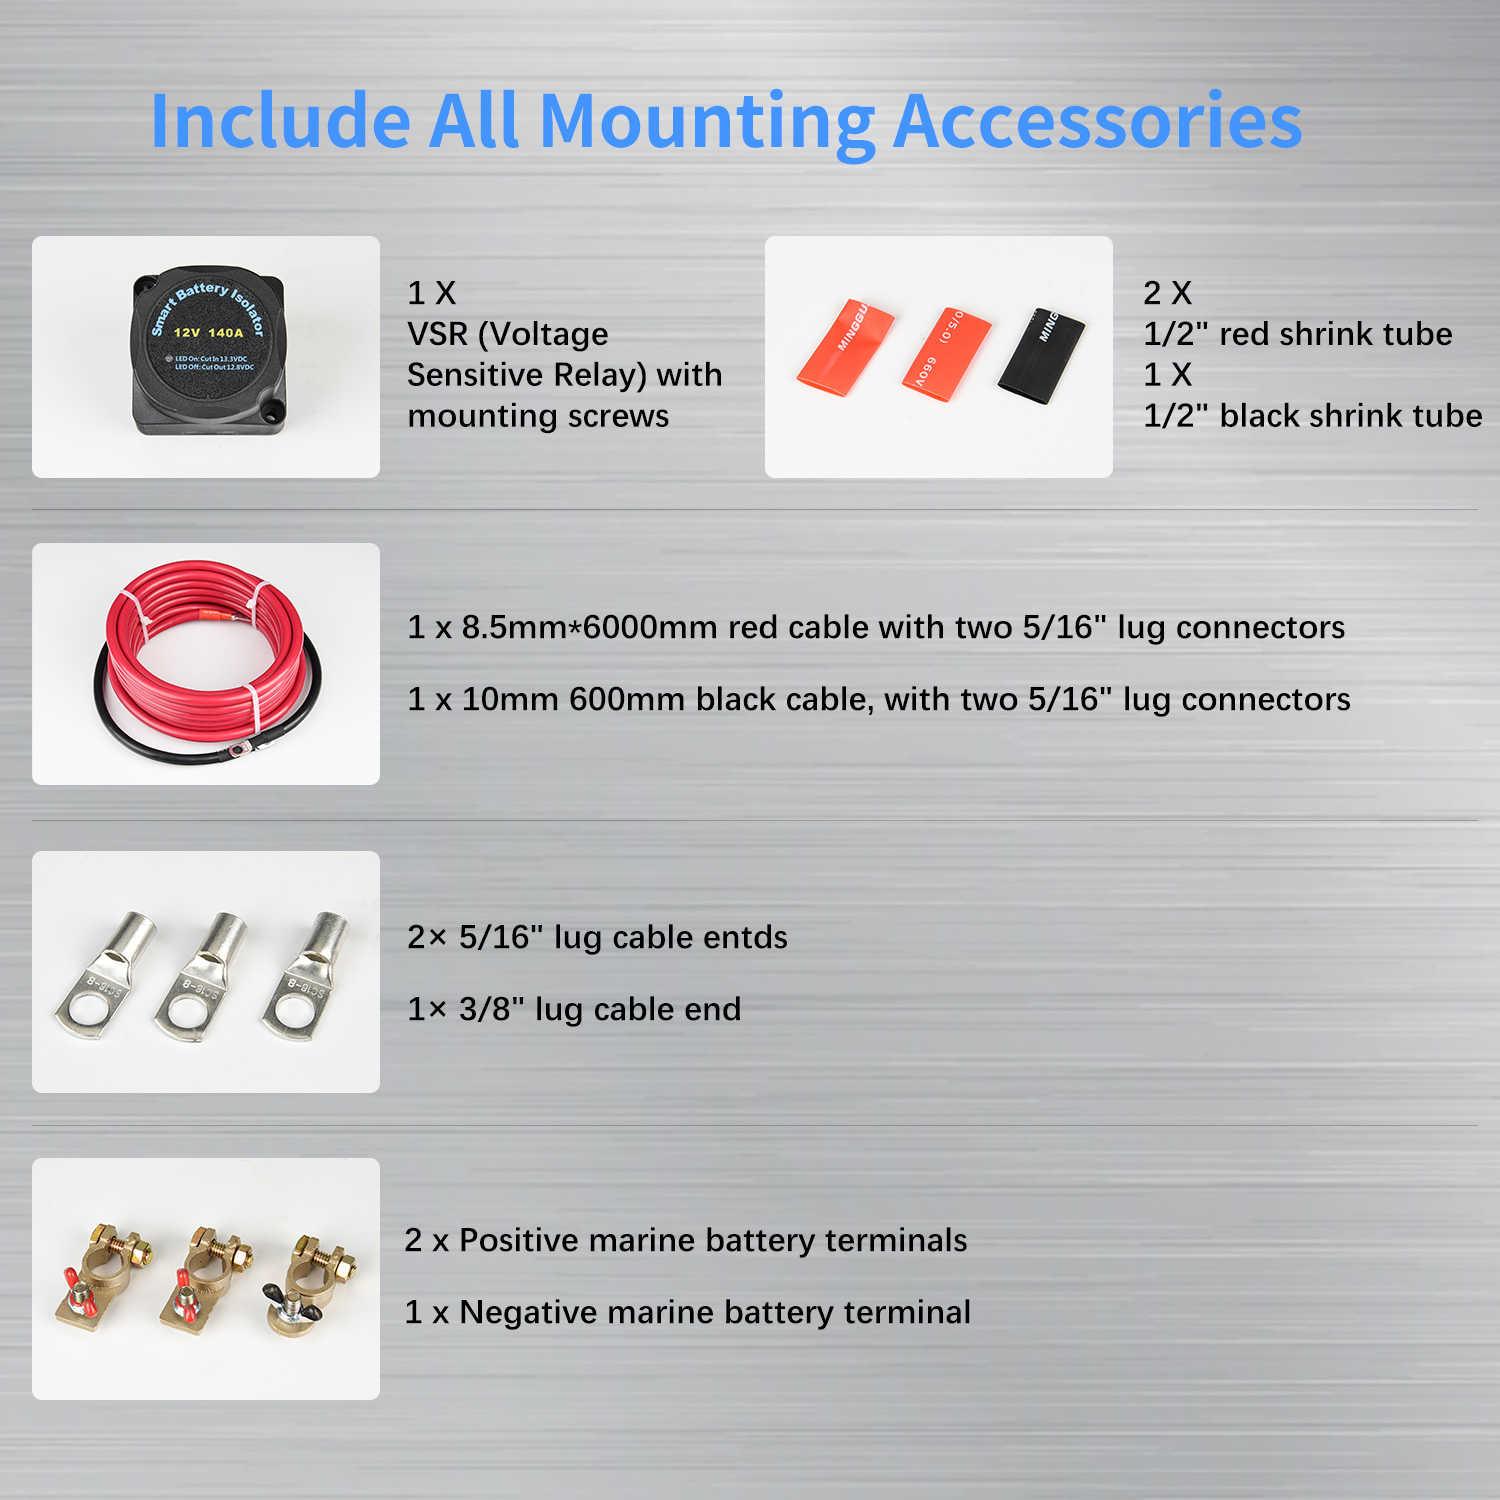 voltage sensitive relay accessories list